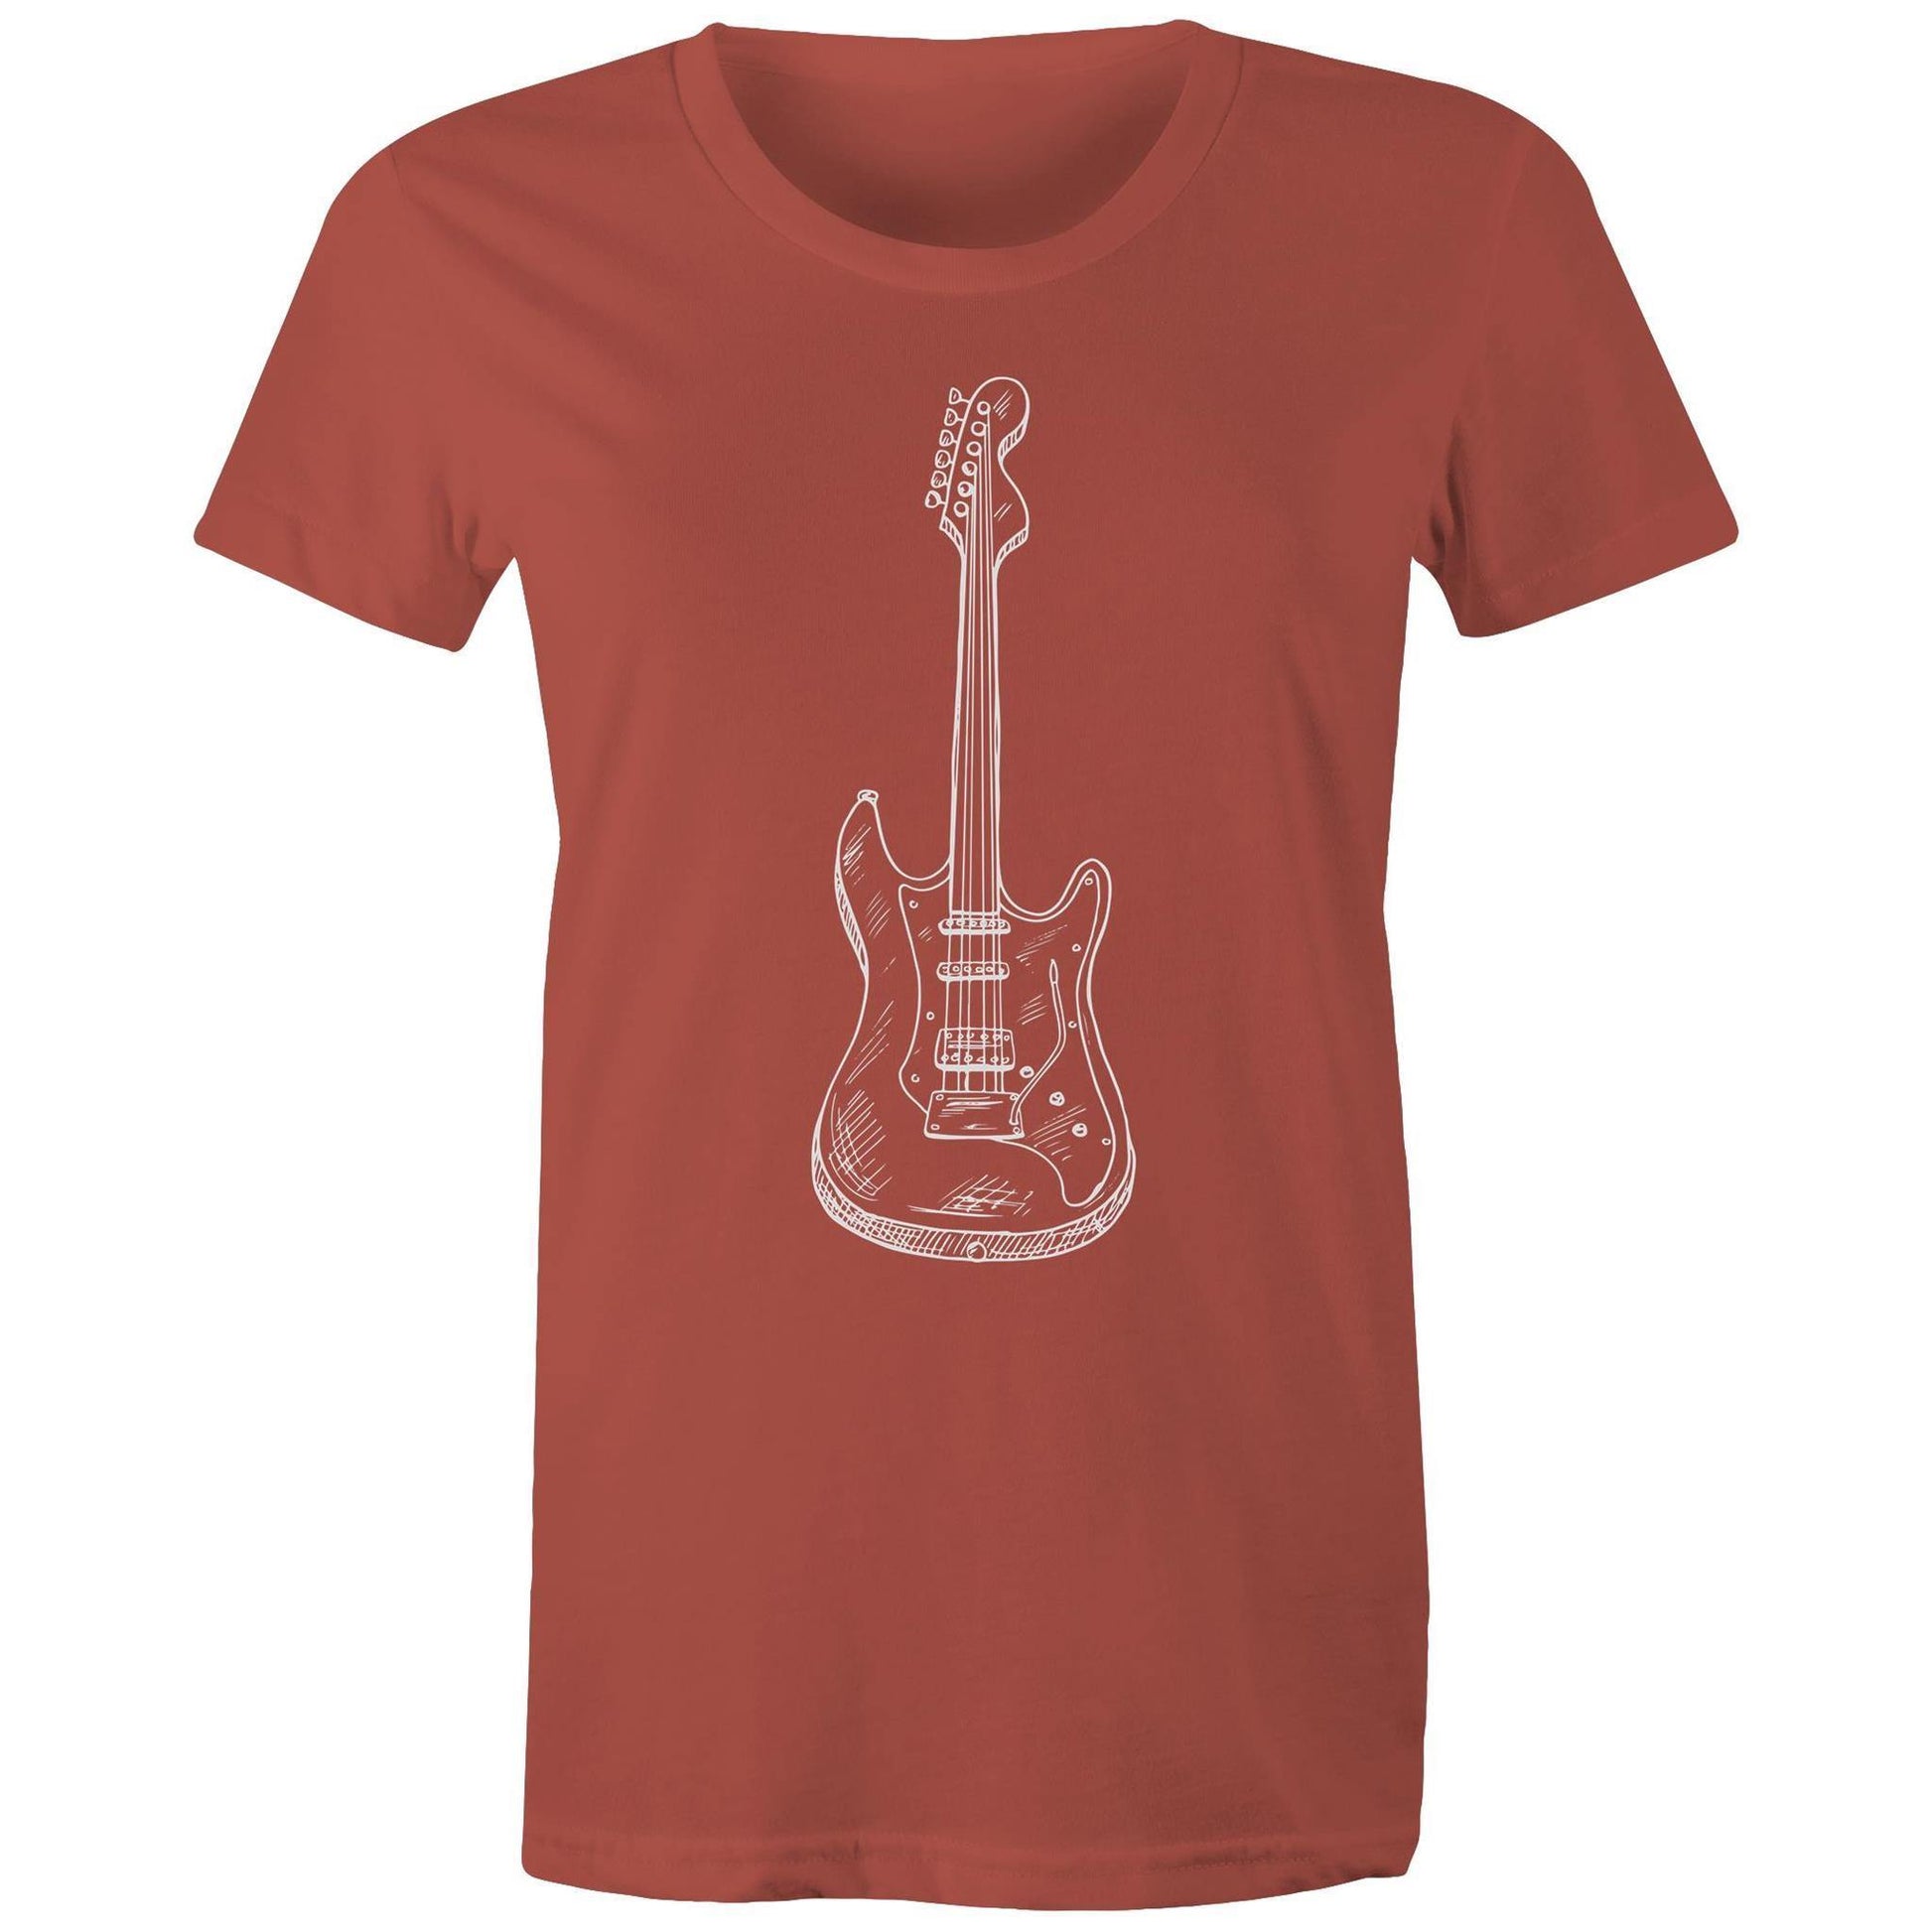 Guitar - Women's T-shirt Coral Womens T-shirt Music Womens